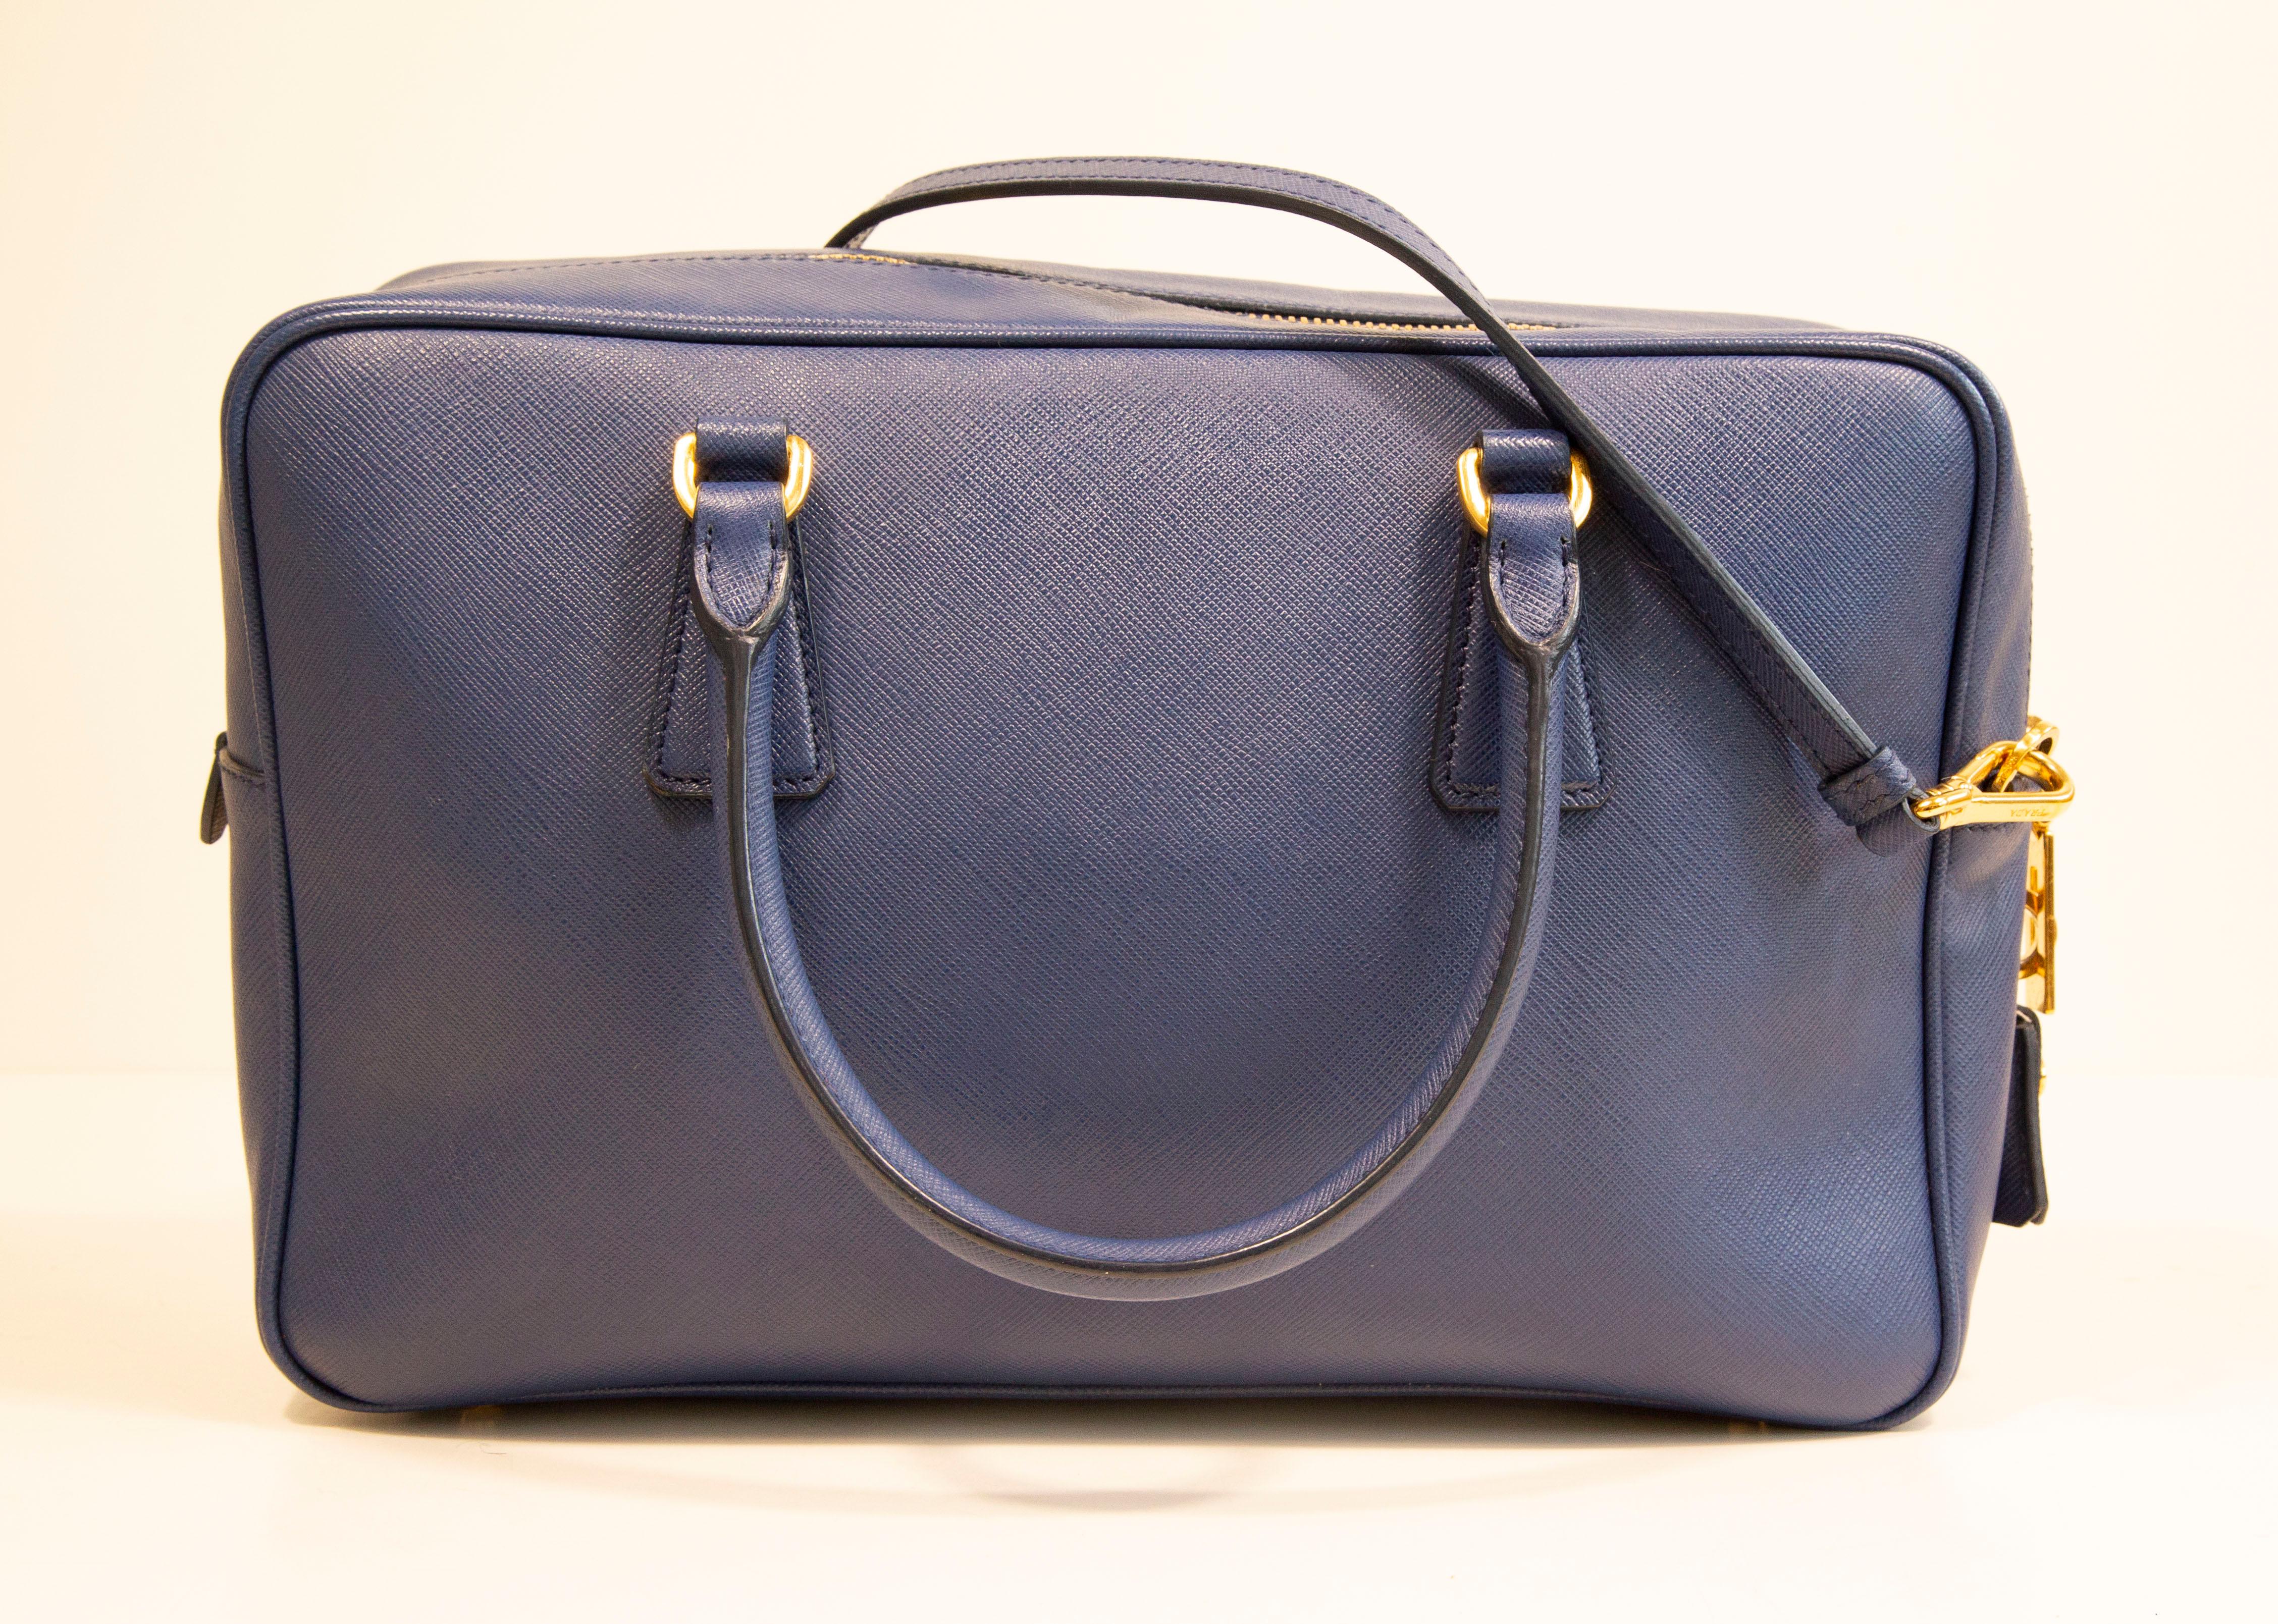  Prada Galleria Two Way Bag in Blue Saffiano Leather 2